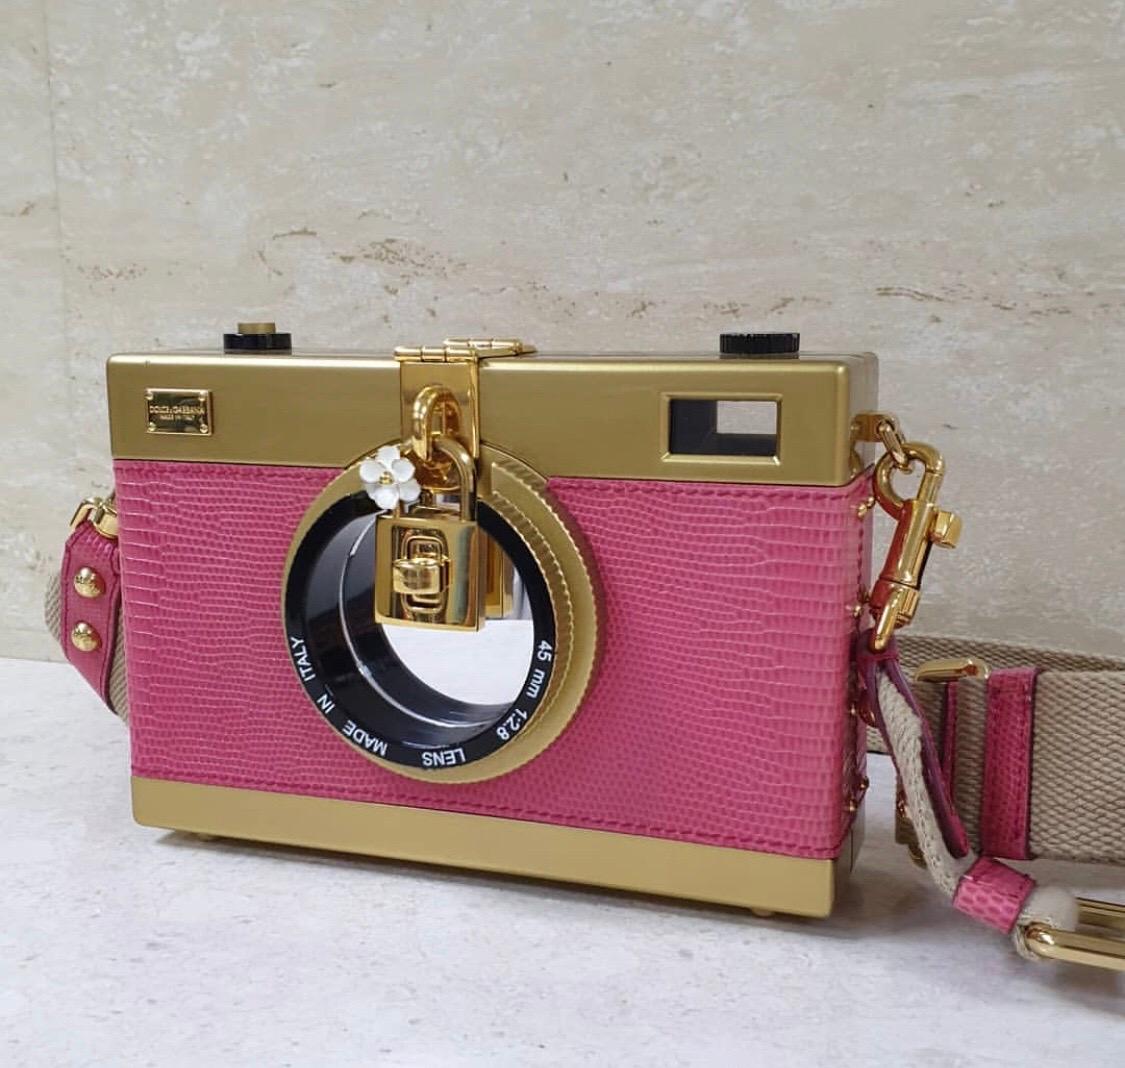 Dolce & Gabbana Pink Camera Bag

-Camera clutch bag with padlock clasp
-Gold toned hardware
-Black velvet lining with one slot
-Adjustable shoulder strap with gold toned studs
-Gold toned plates embossed with Dolce & Gabbana

18.5*12.5*5 cm

For